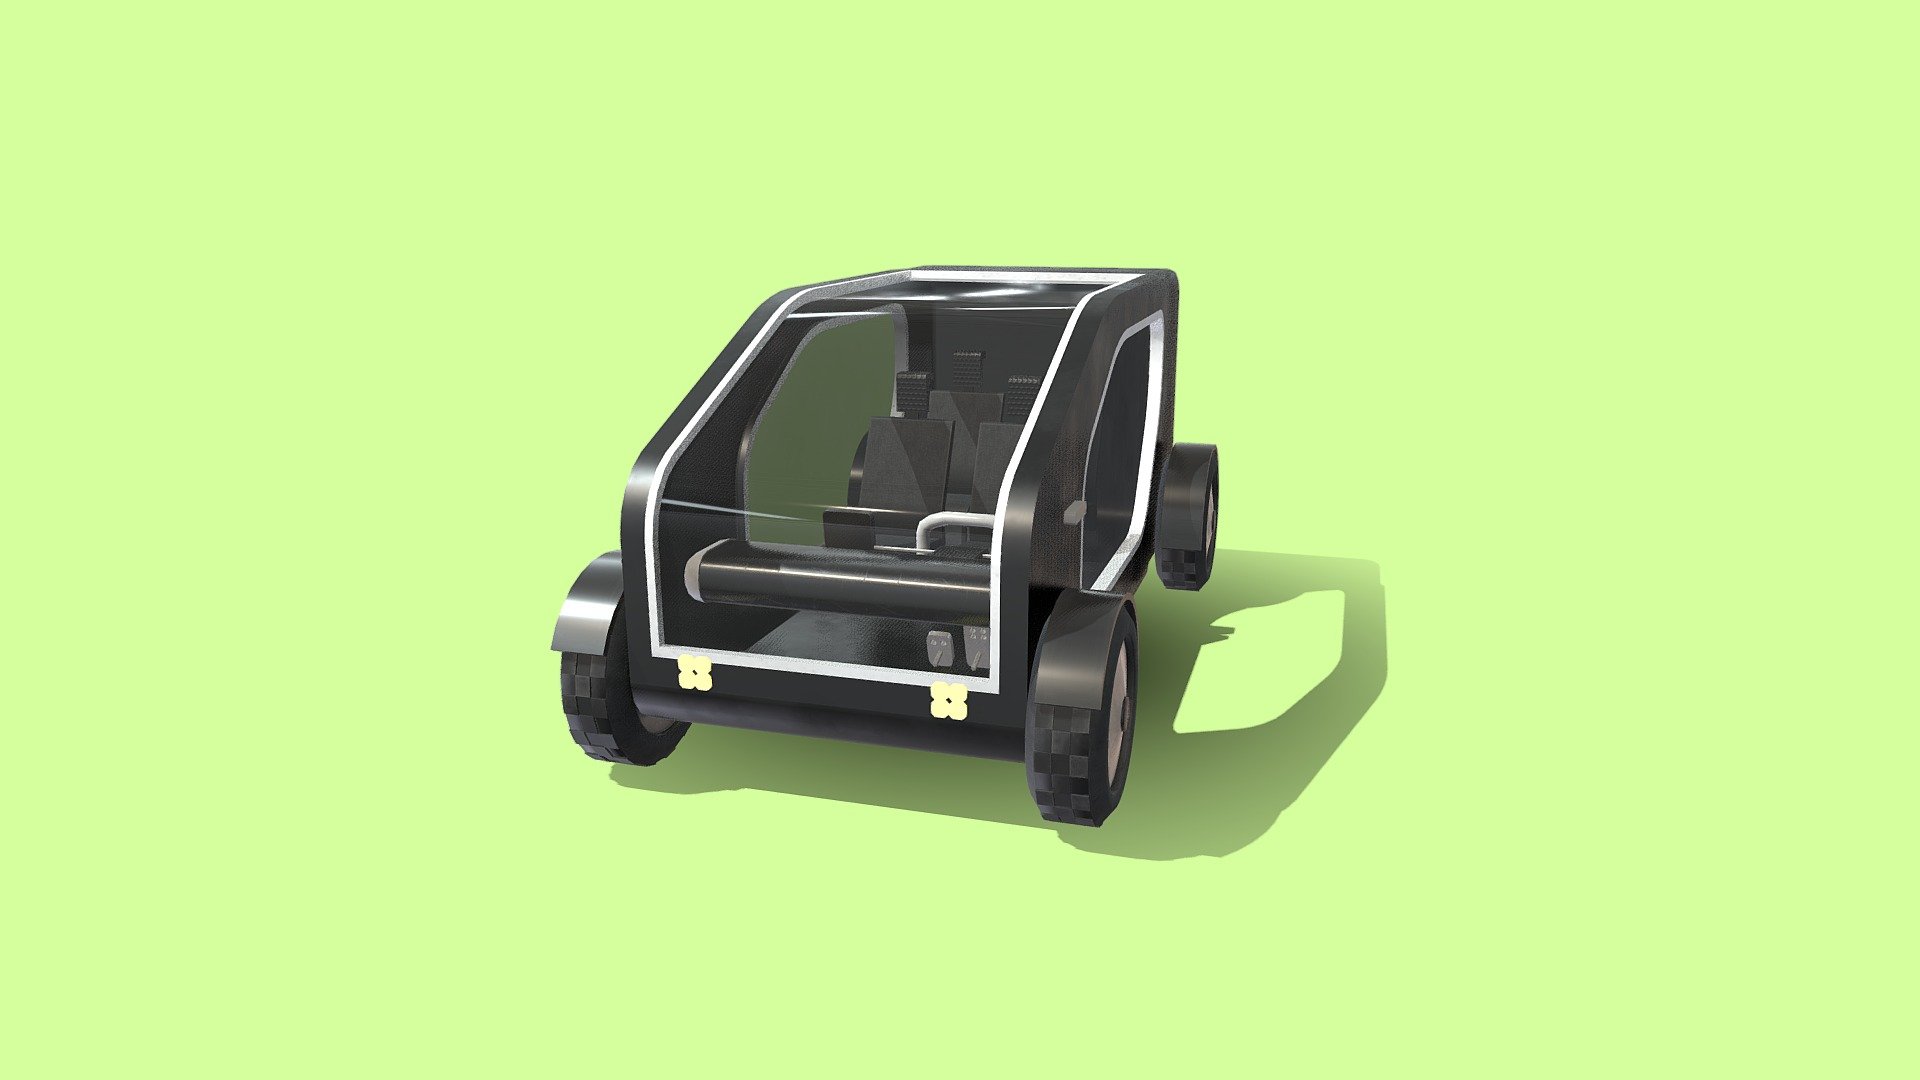 Hello! The Futuristic Car designed with Blender version 3.1.2, Textured in Substance Painter version 7.4.3 - Futuristic Car - Download Free 3D model by ezgi bakim (@ezgibakim) 3d model